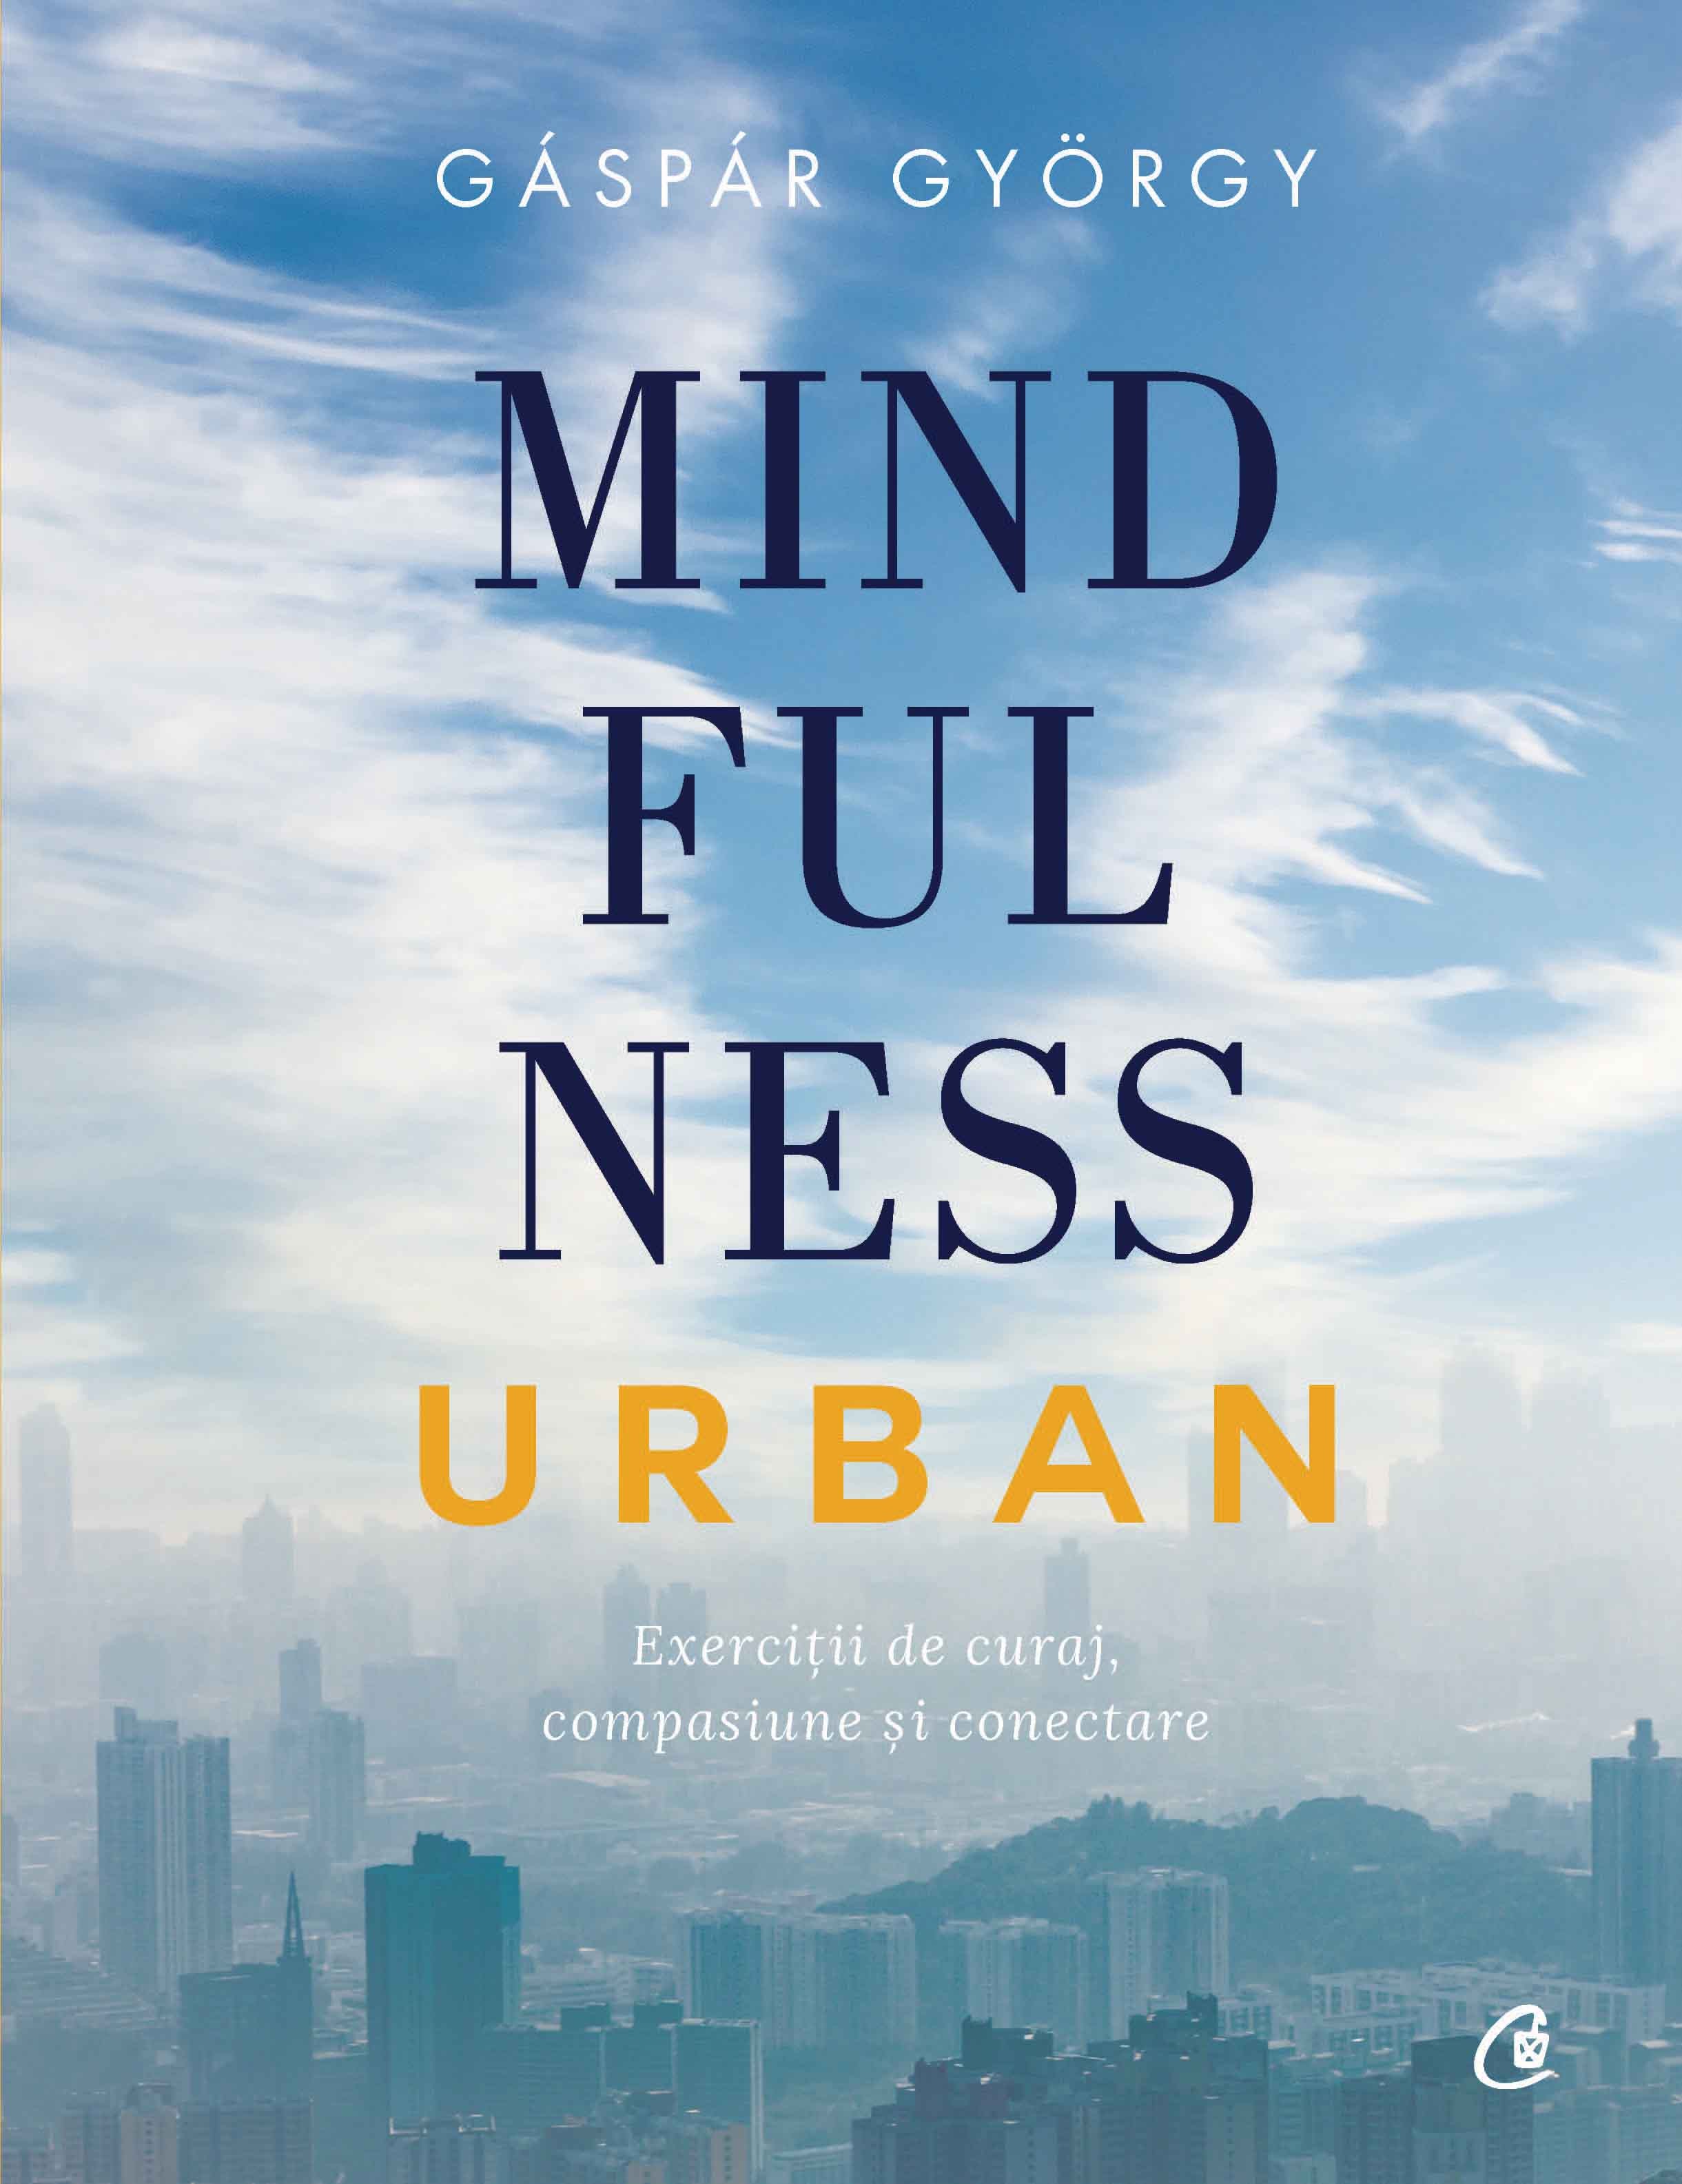 Coperta cărții: Mindfulness urban - lonnieyoungblood.com